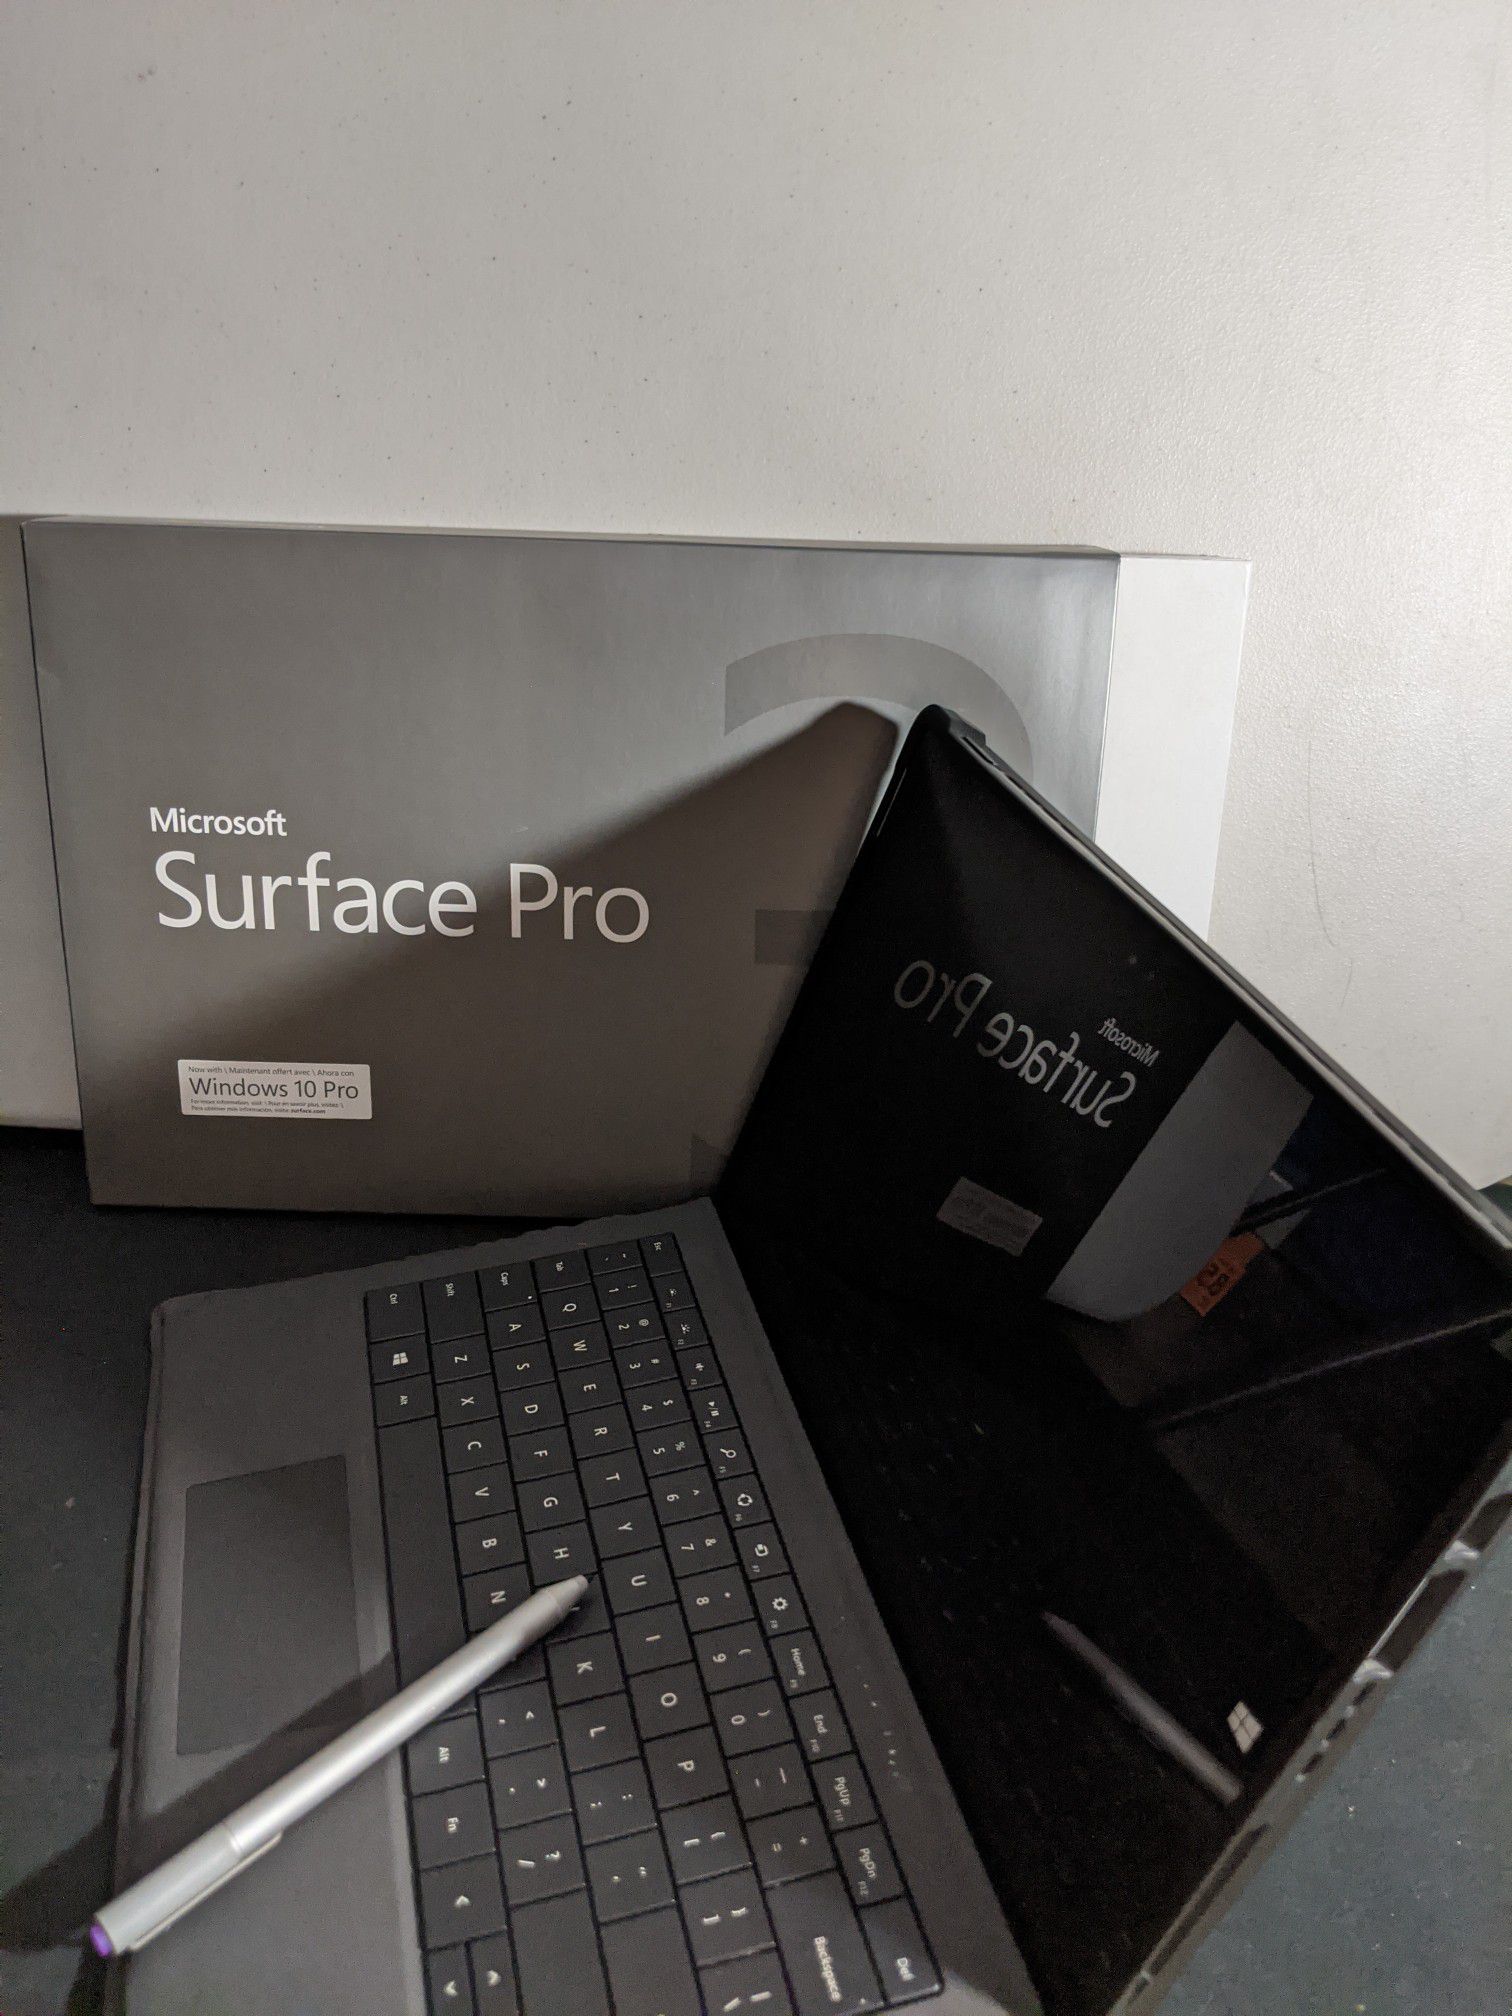 Microsoft Surface Pro 3 in box + accessories, case, sleeve, keyboard, pen